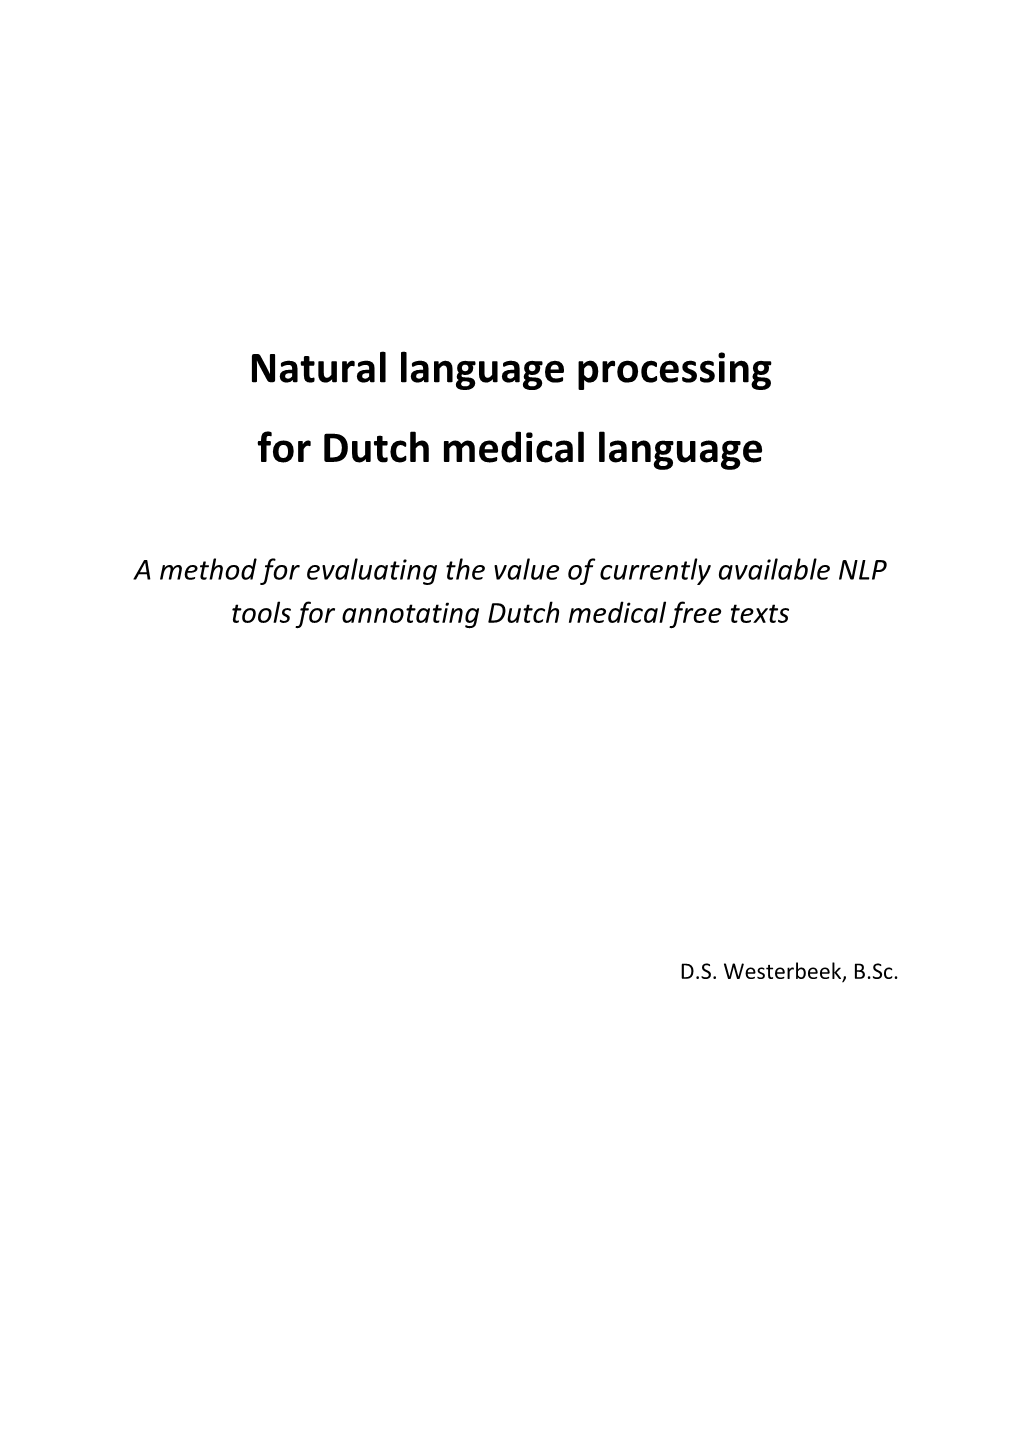 Natural Language Processing for Dutch Medical Language